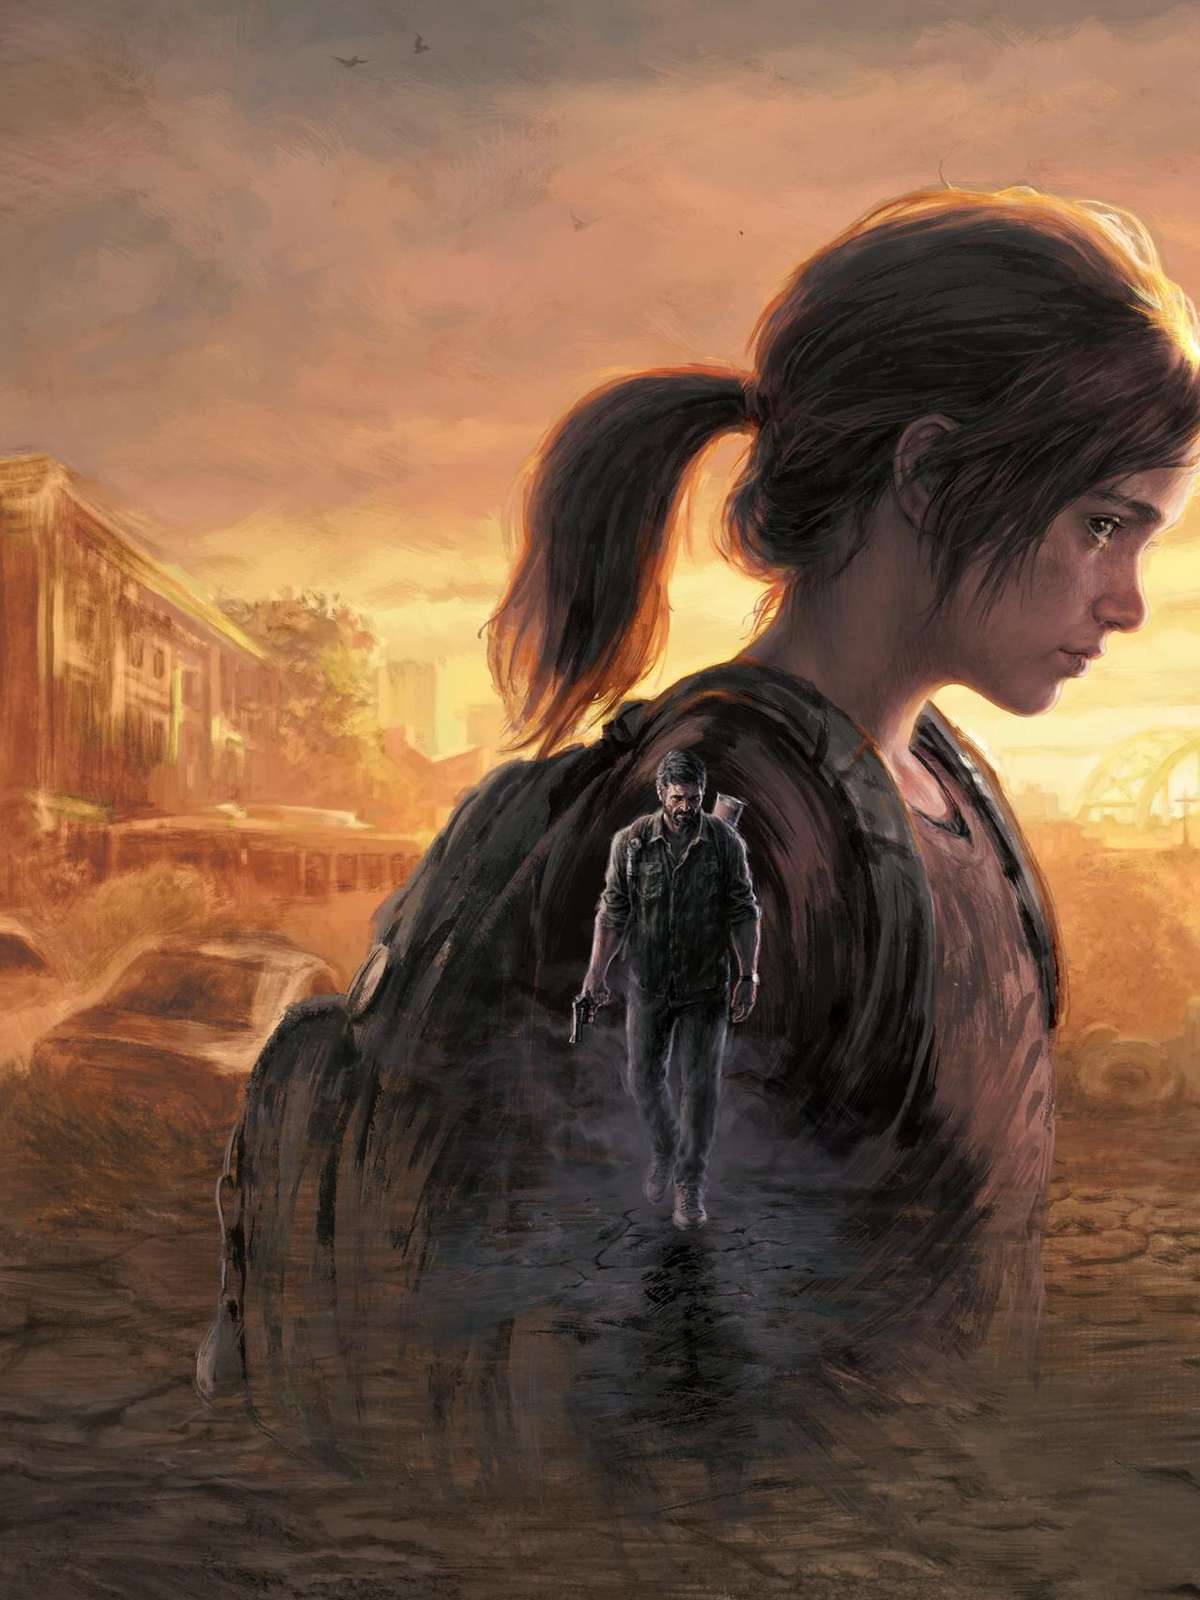 The Last of Us: Arte imagina como seria Sarah se ela estivesse viva! -  Tribo Gamer